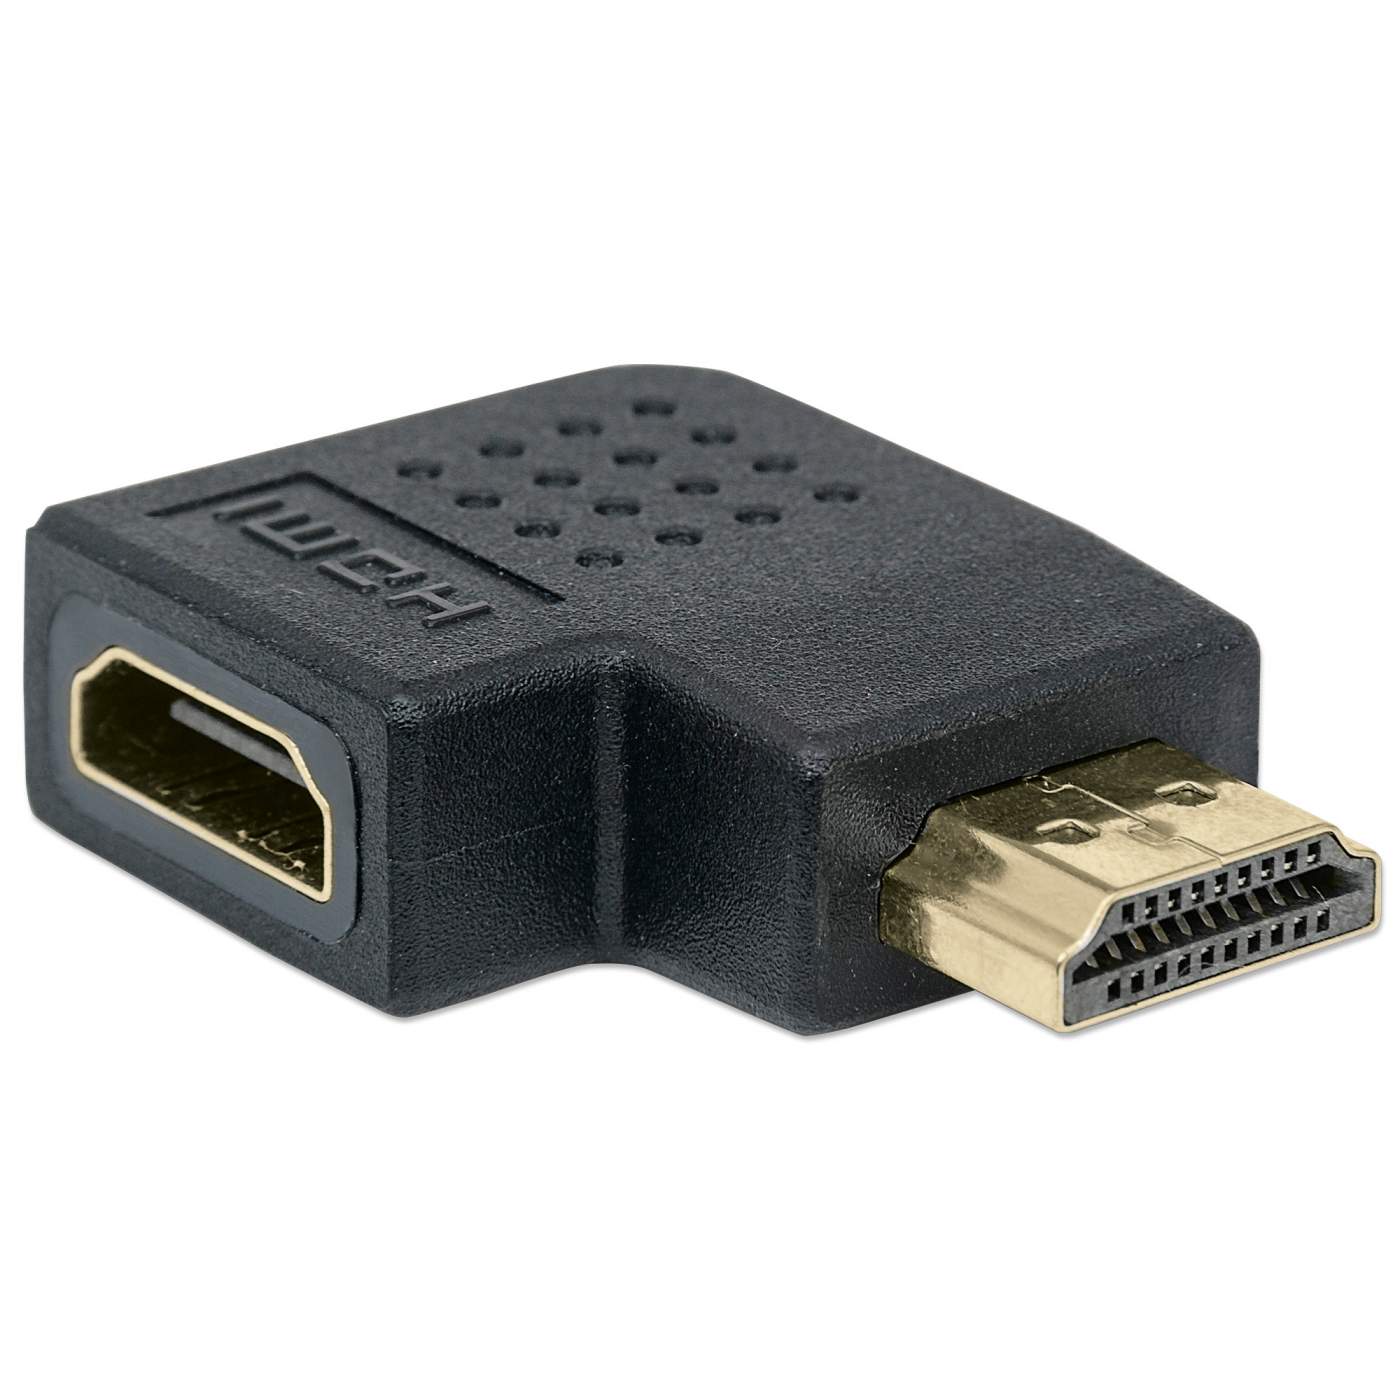 HDMI Adapter Image 5